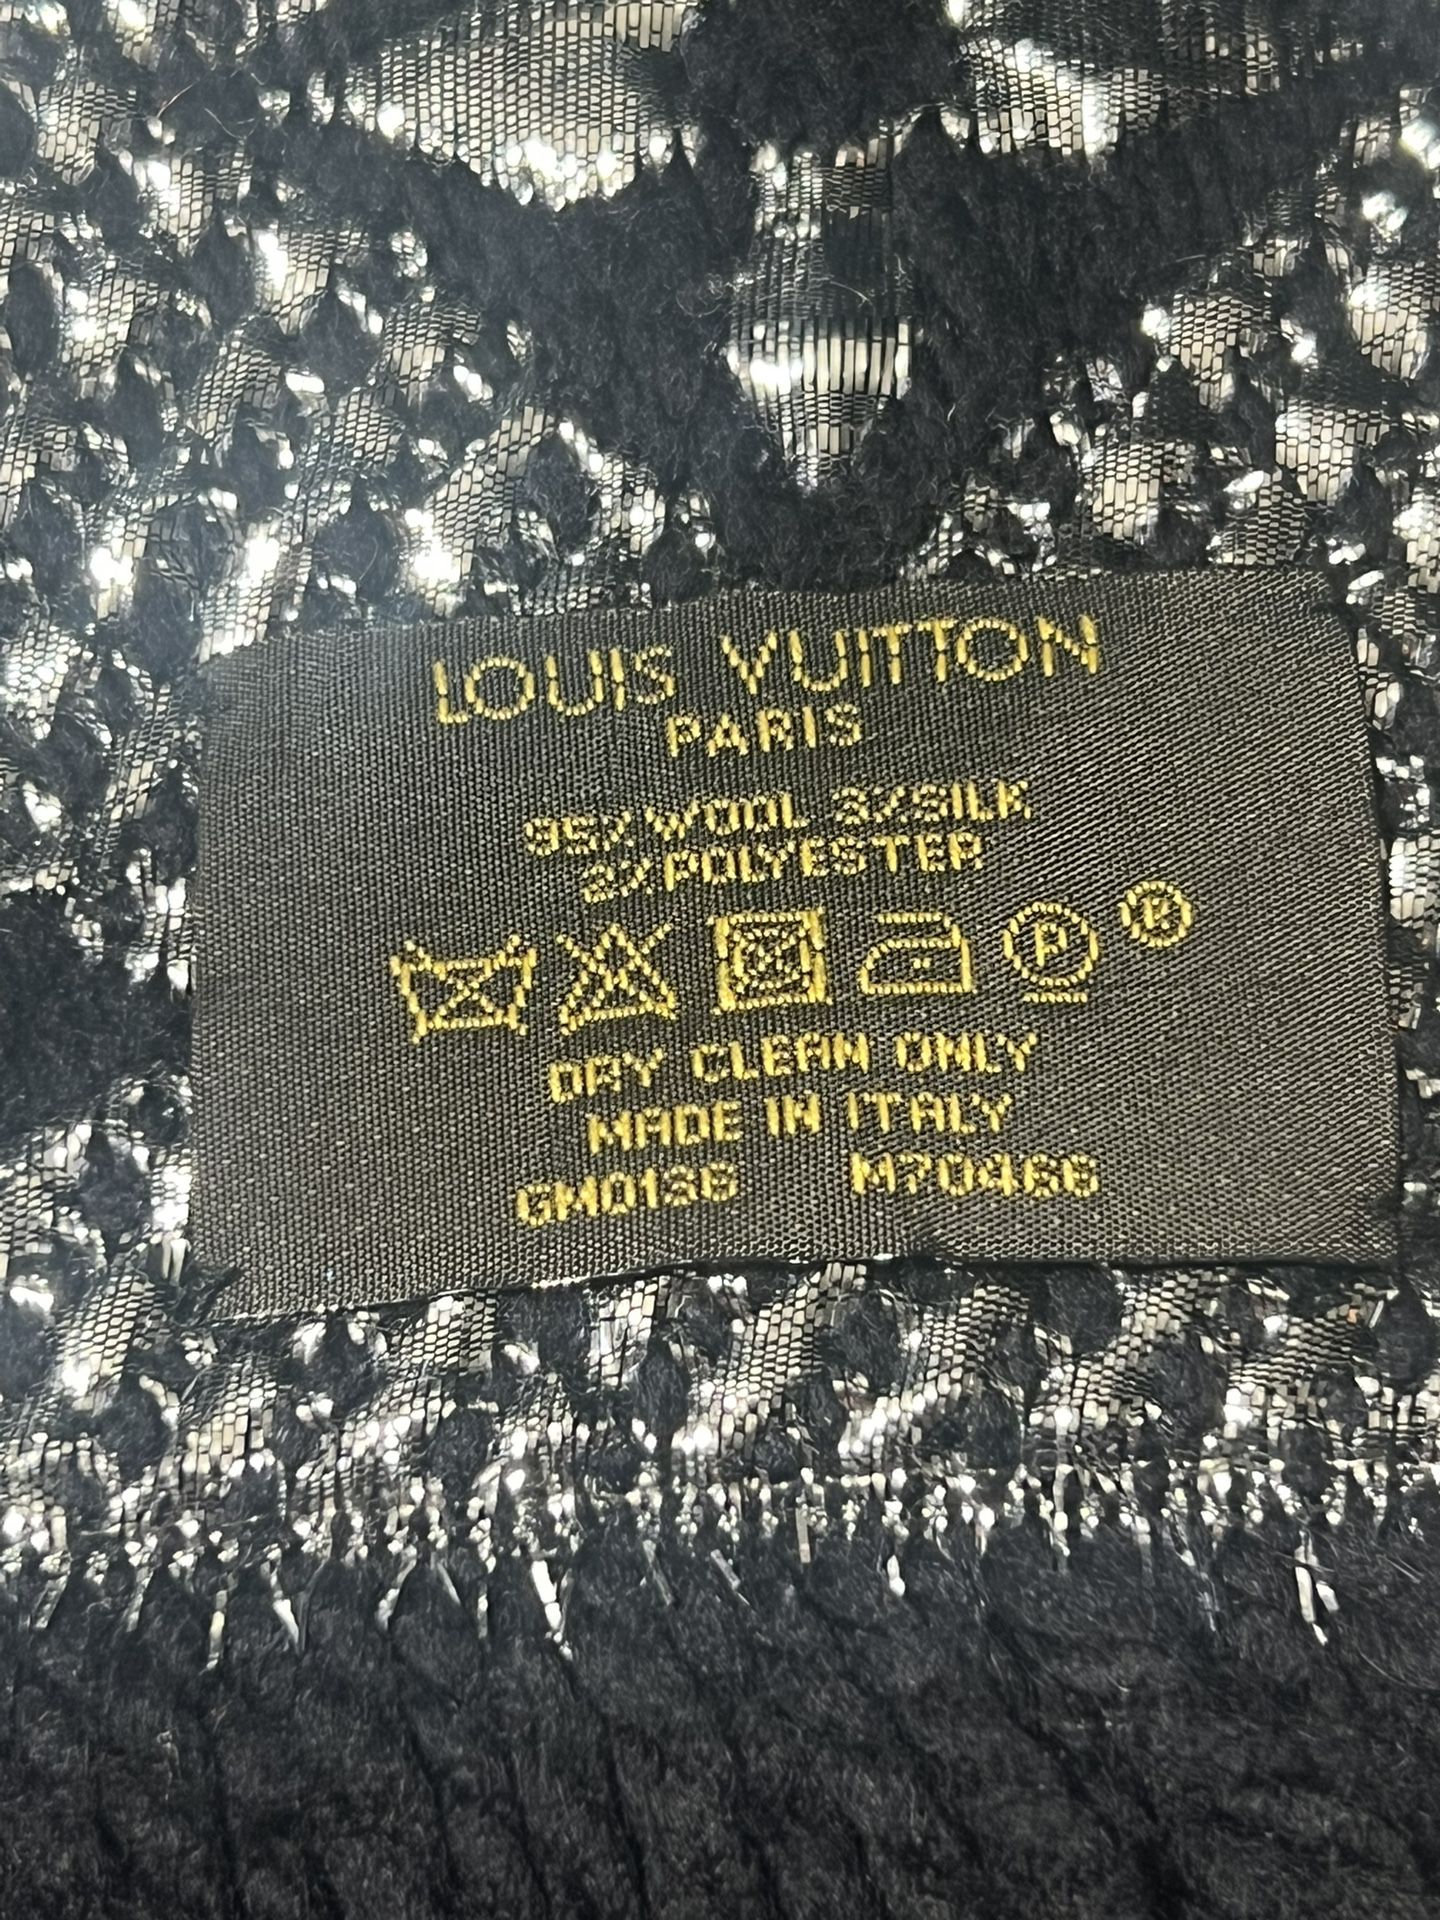 Louis Vuitton LV Unisex Ultimate Shine Scarf Beige Allover